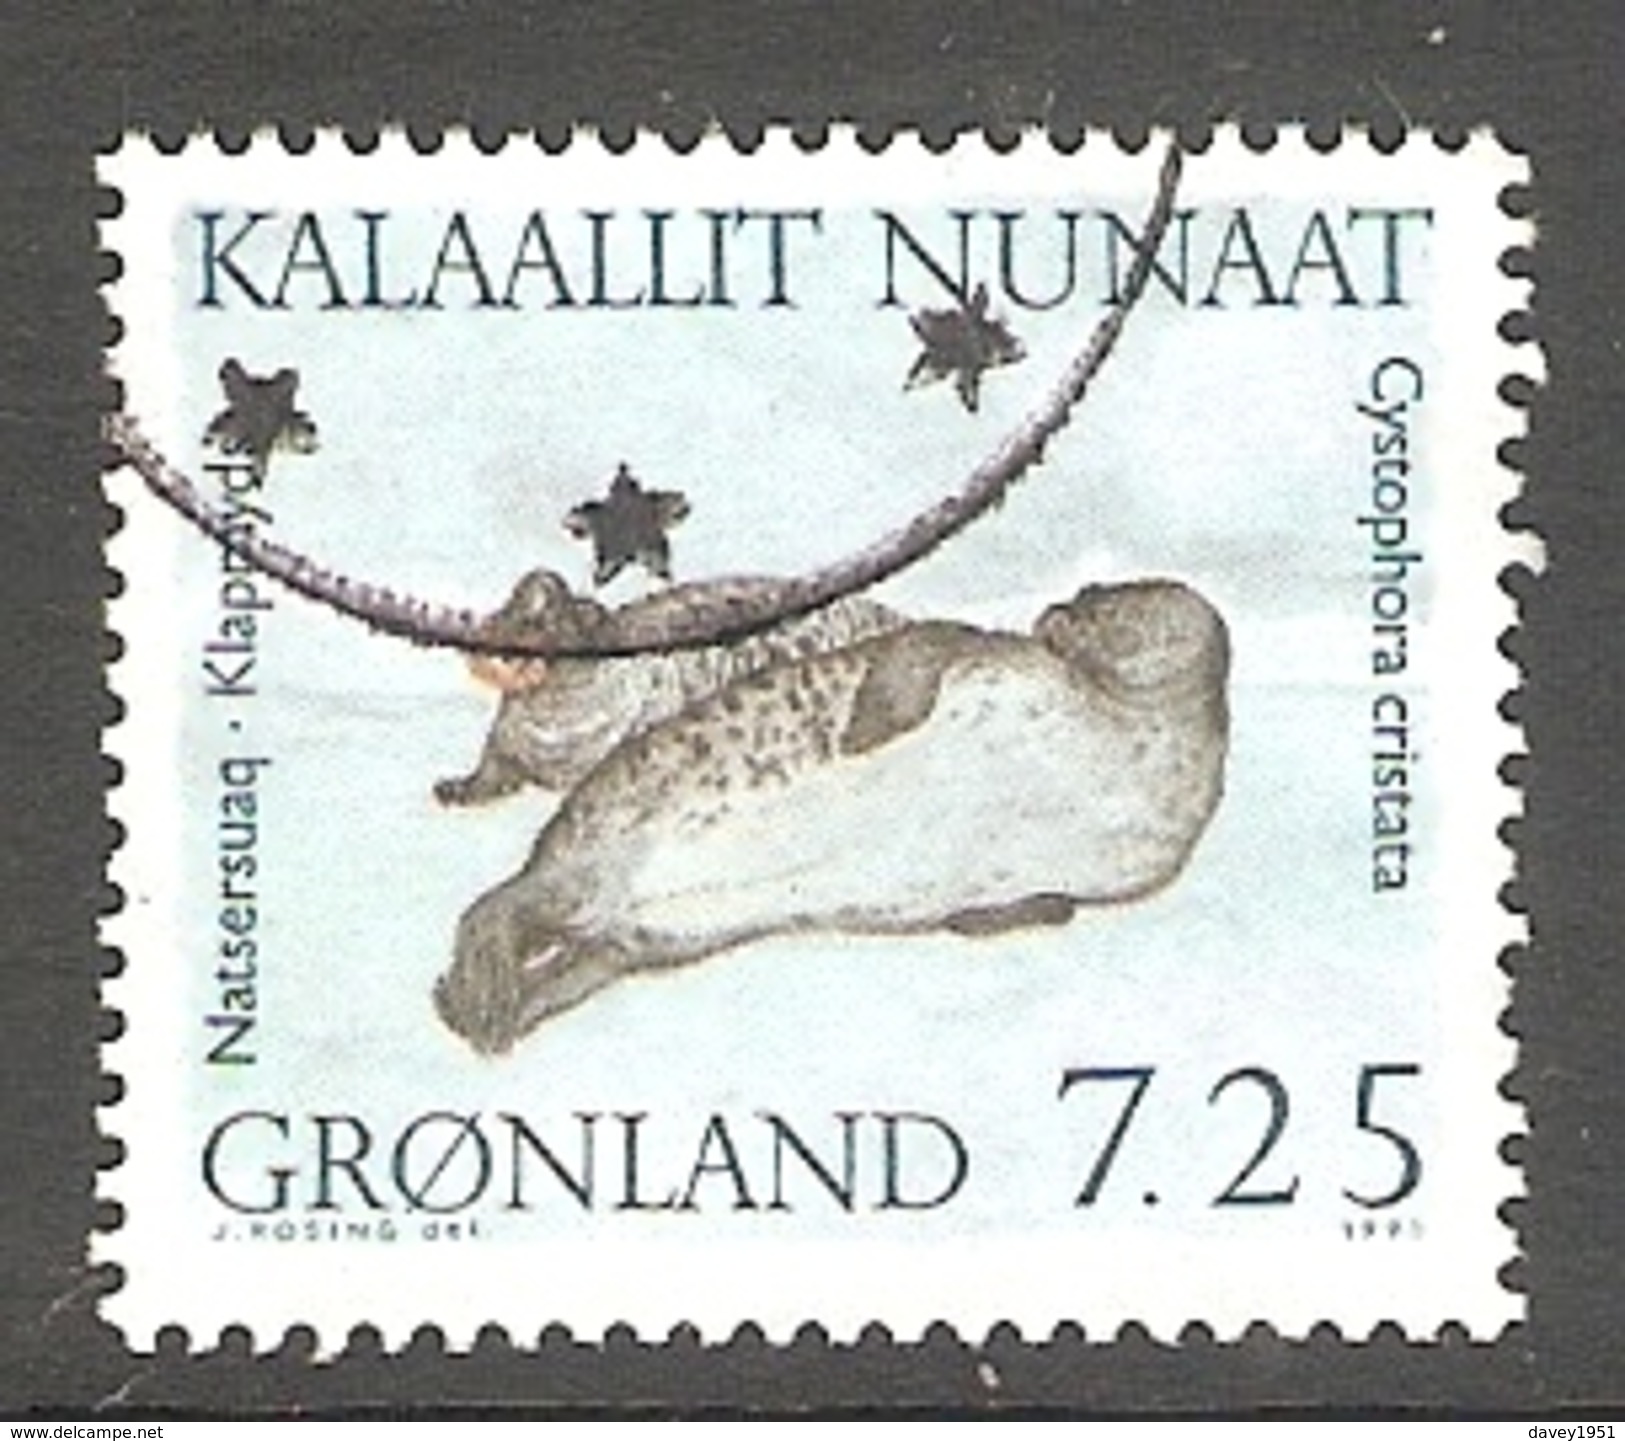 003995 Greenland 1991 Marine Mammals 7.25K FU - Used Stamps